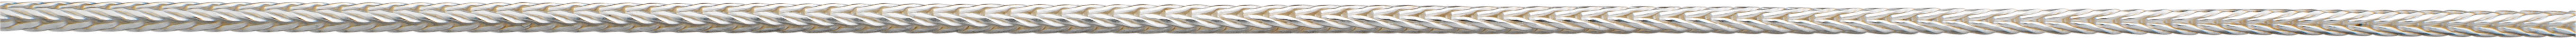 vossestaart ketting zilver 925/- Ø 1,00mm